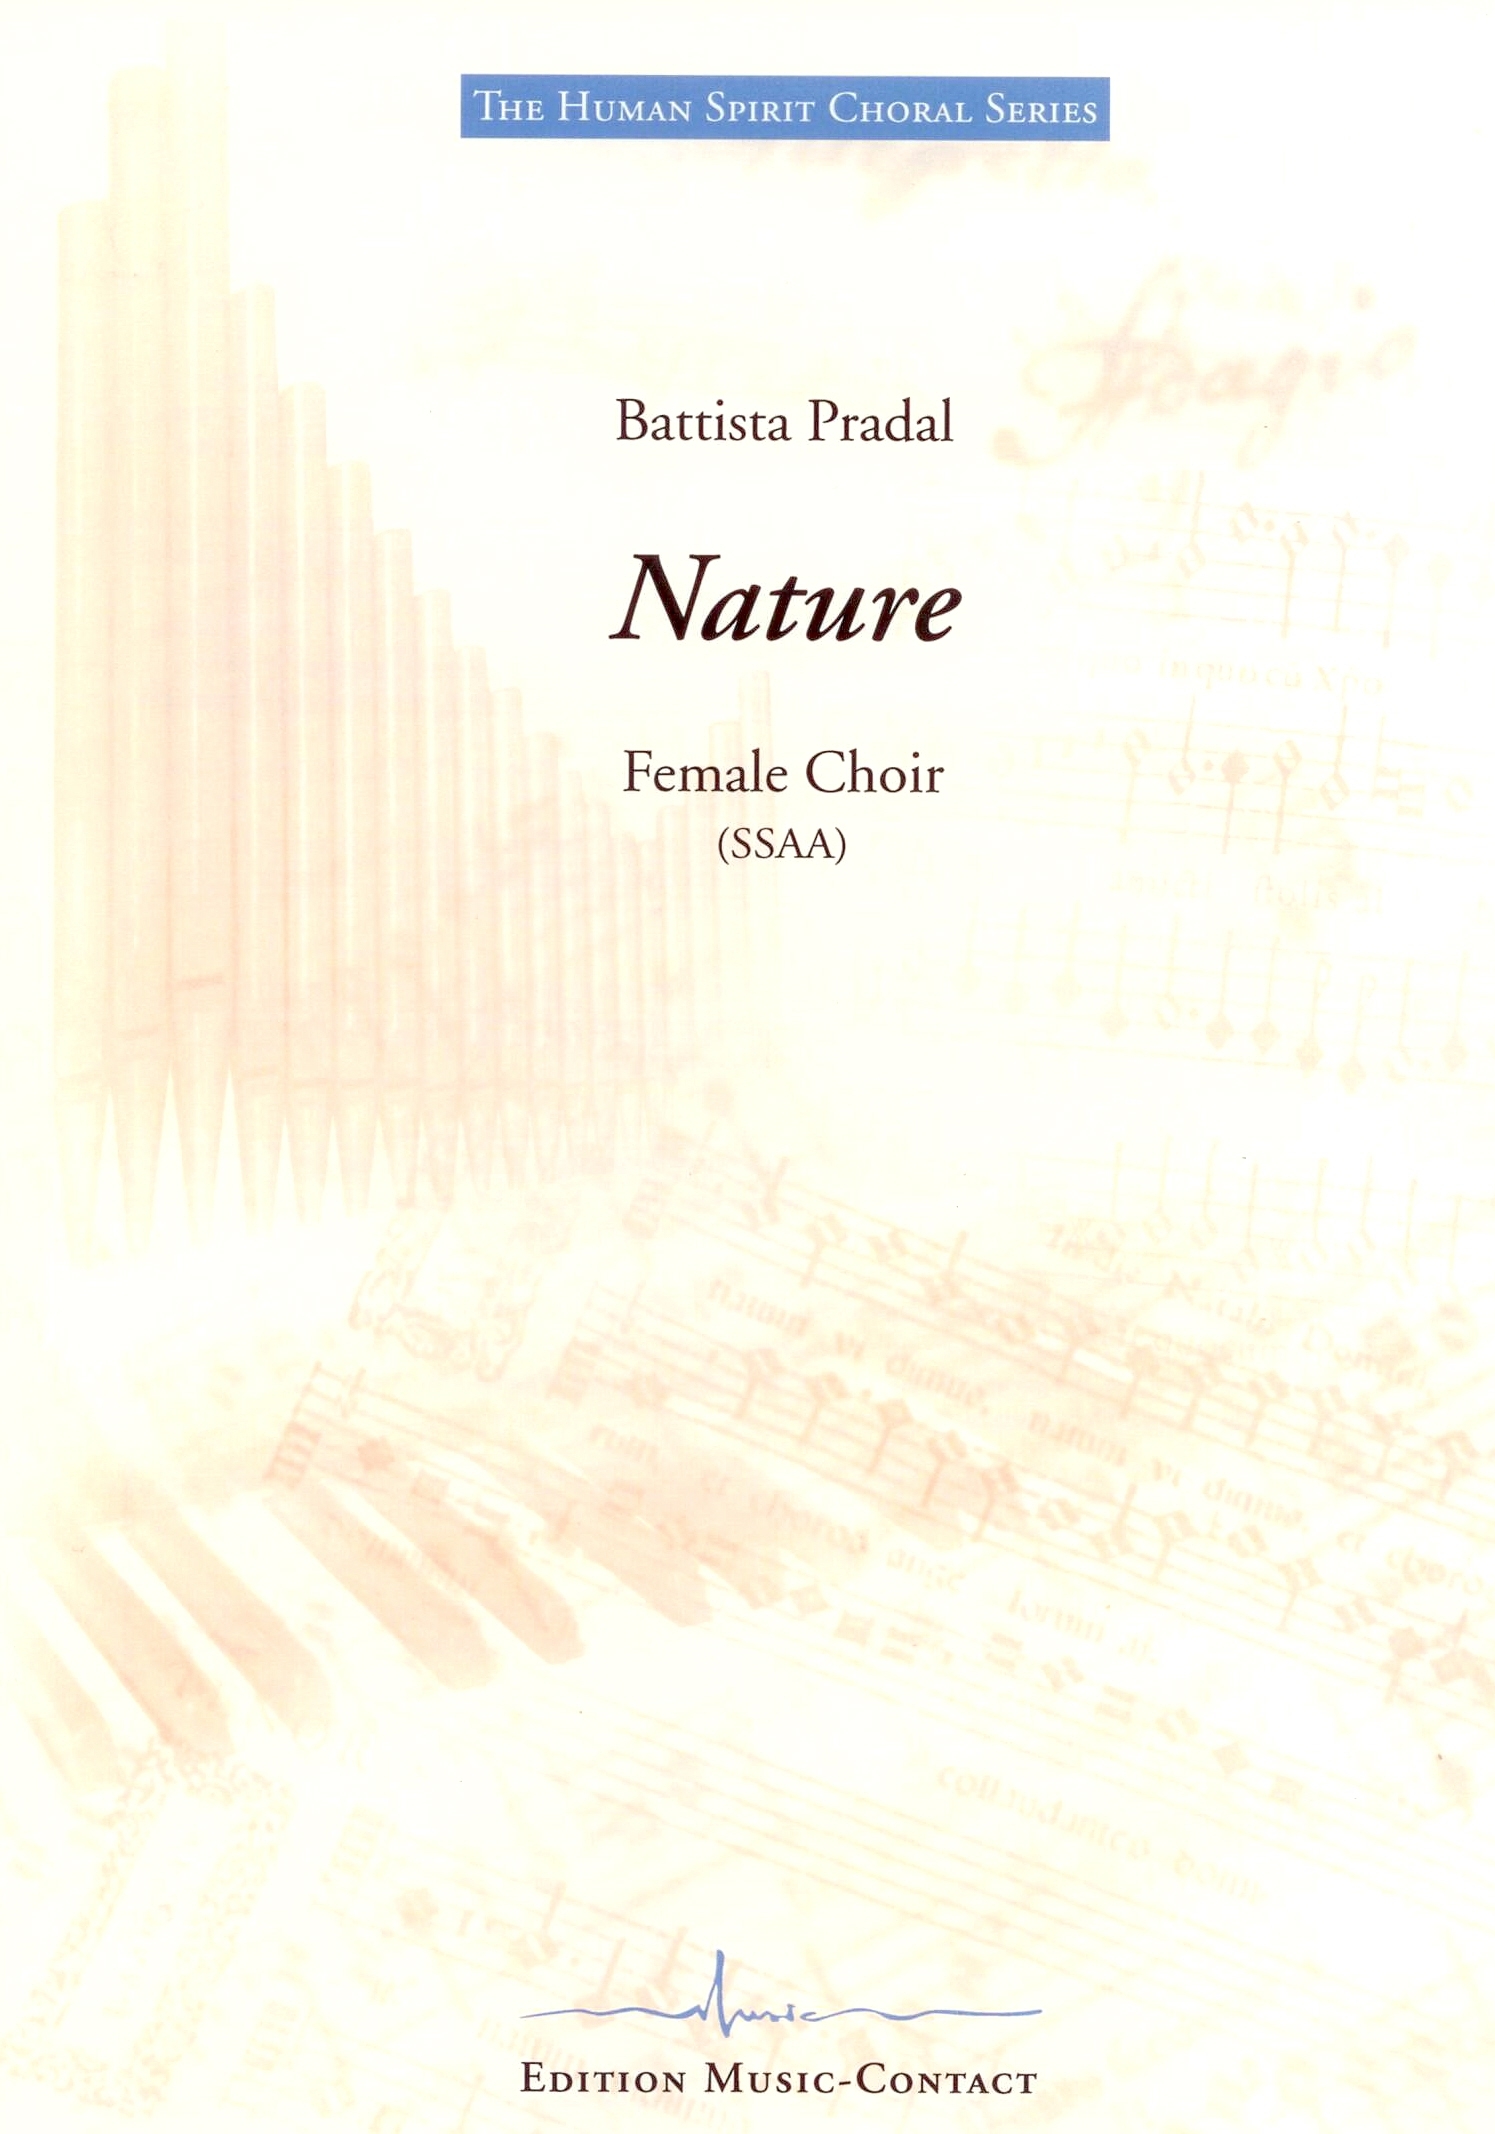 Nature - Show sample score